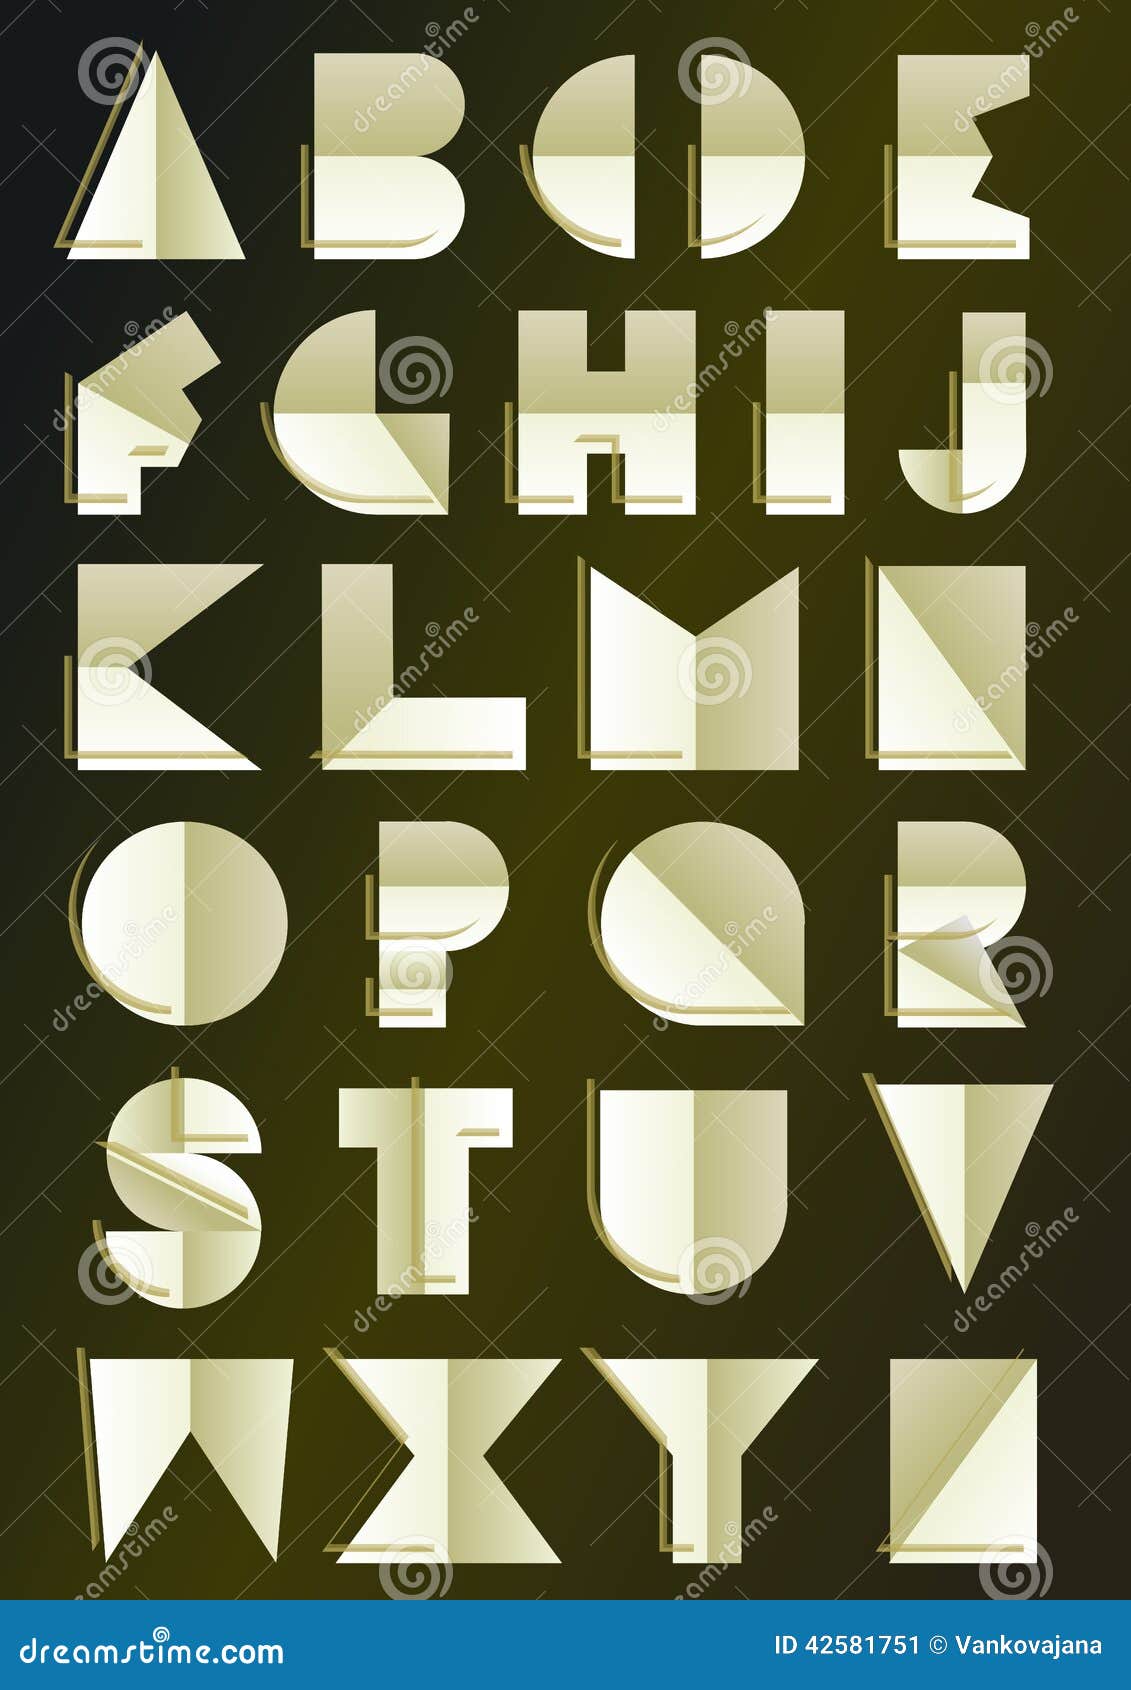 art deco inspired alphabet